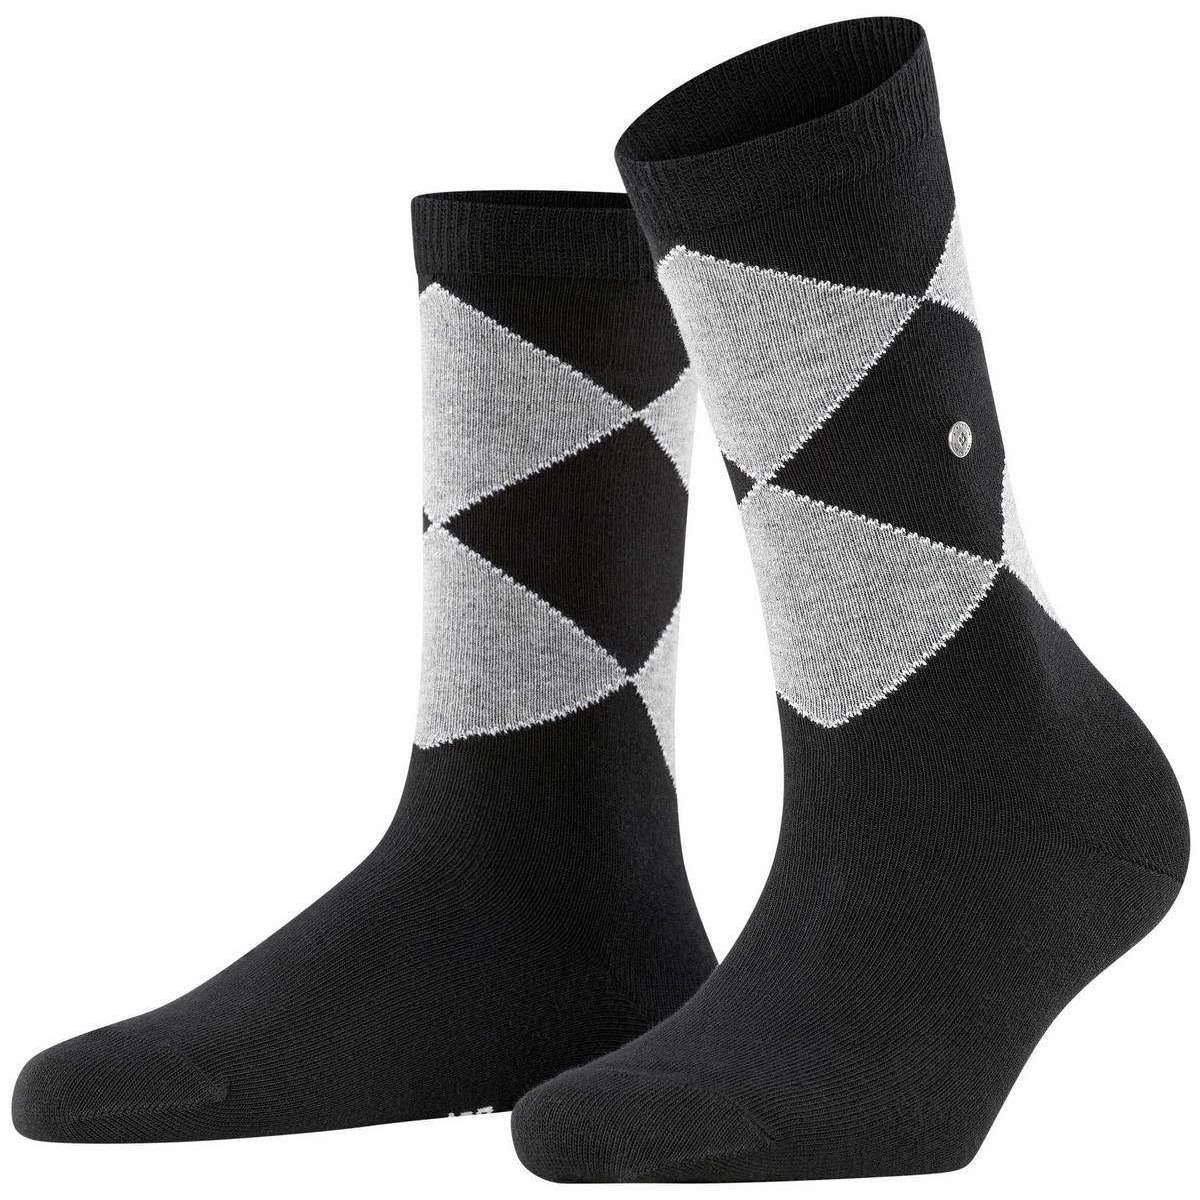 Burlington Darlington Socks - Black/Grey